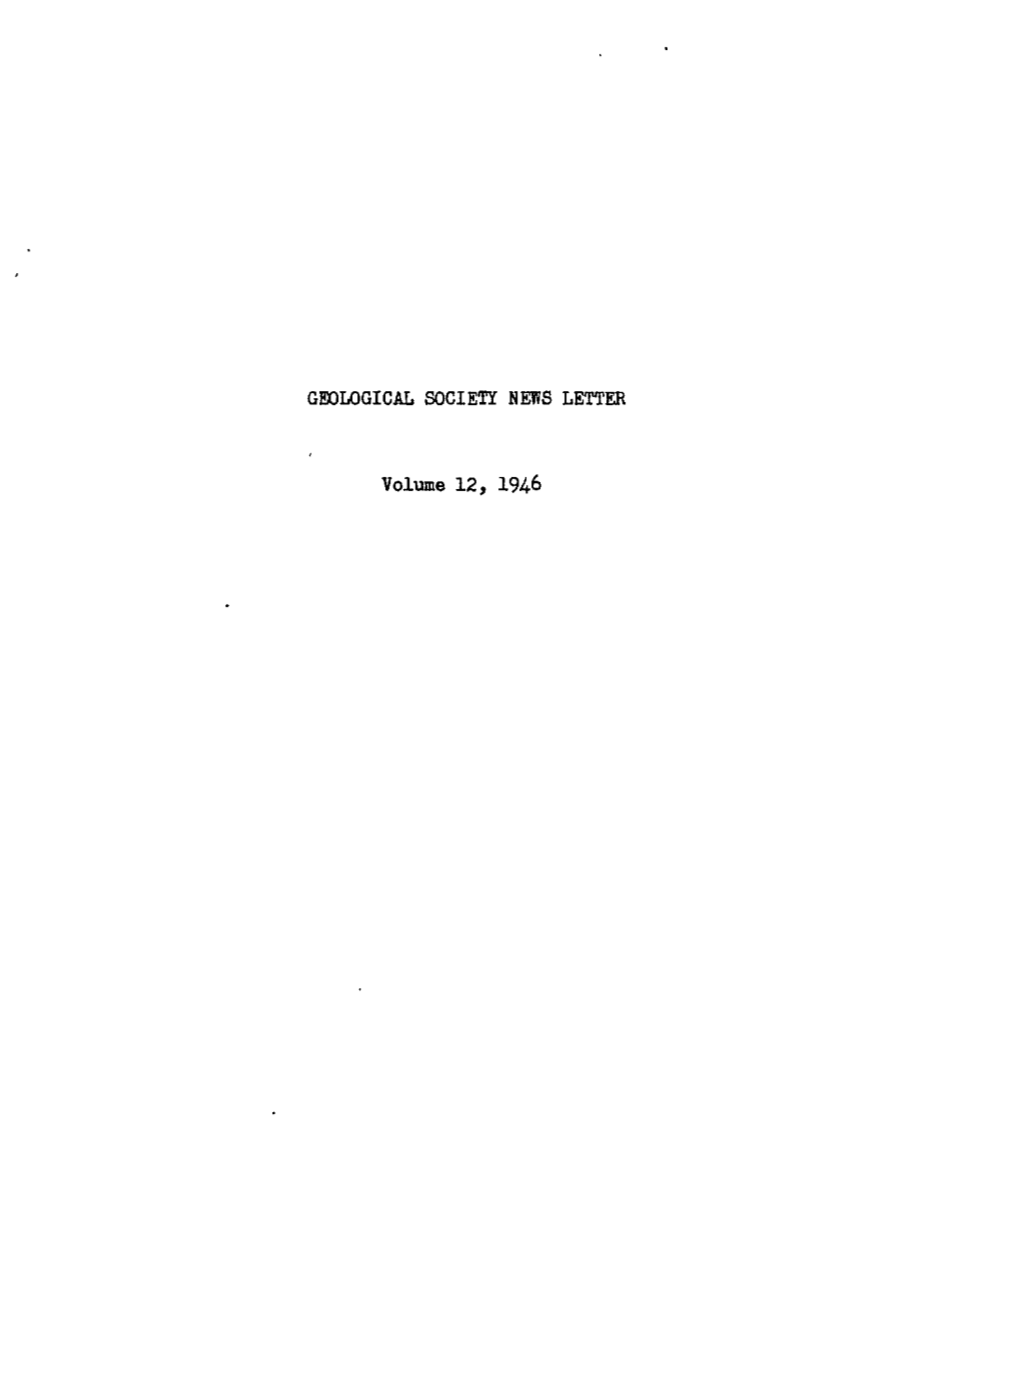 Volume 12, 1946 1946 INDNX to GEOLOGIC,\L F::EWS-L1'l'l'er Volume 12 Compiled by John Eliot Allen, and 1!:1-Iart If